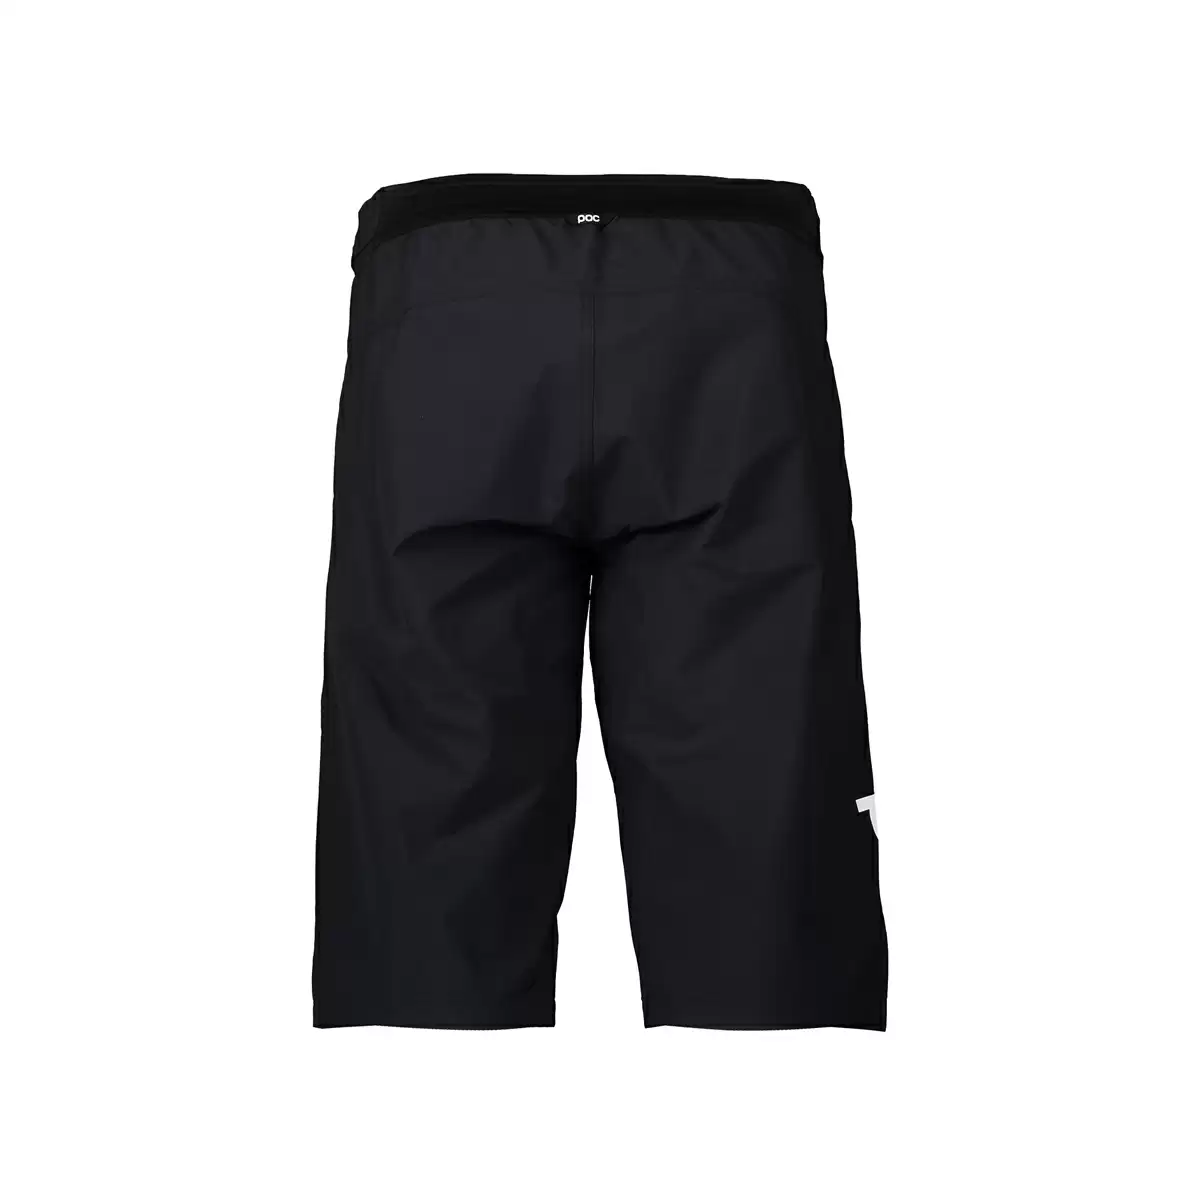 Pantaloni corti essential enduro shorts nero taglia XXL #1